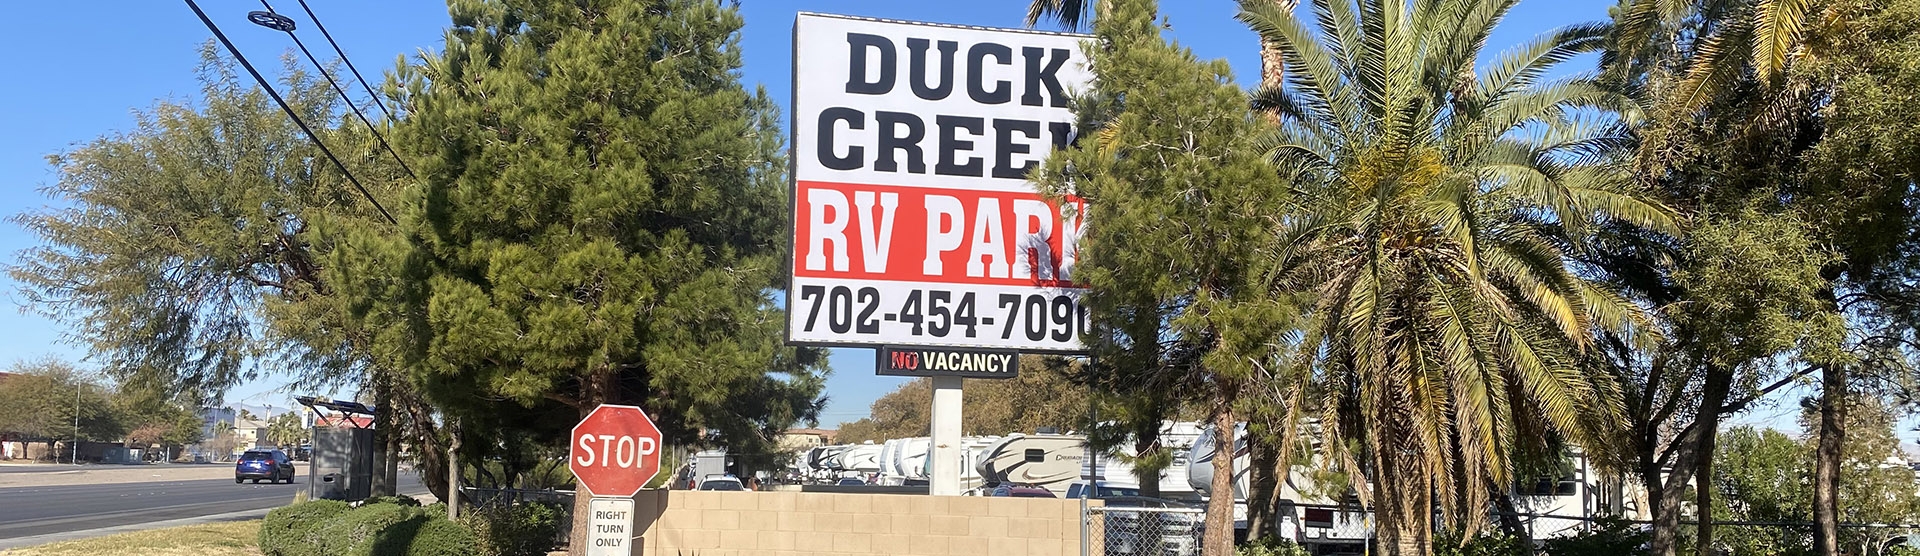 Duck Creek RV Park & Resort Sign  